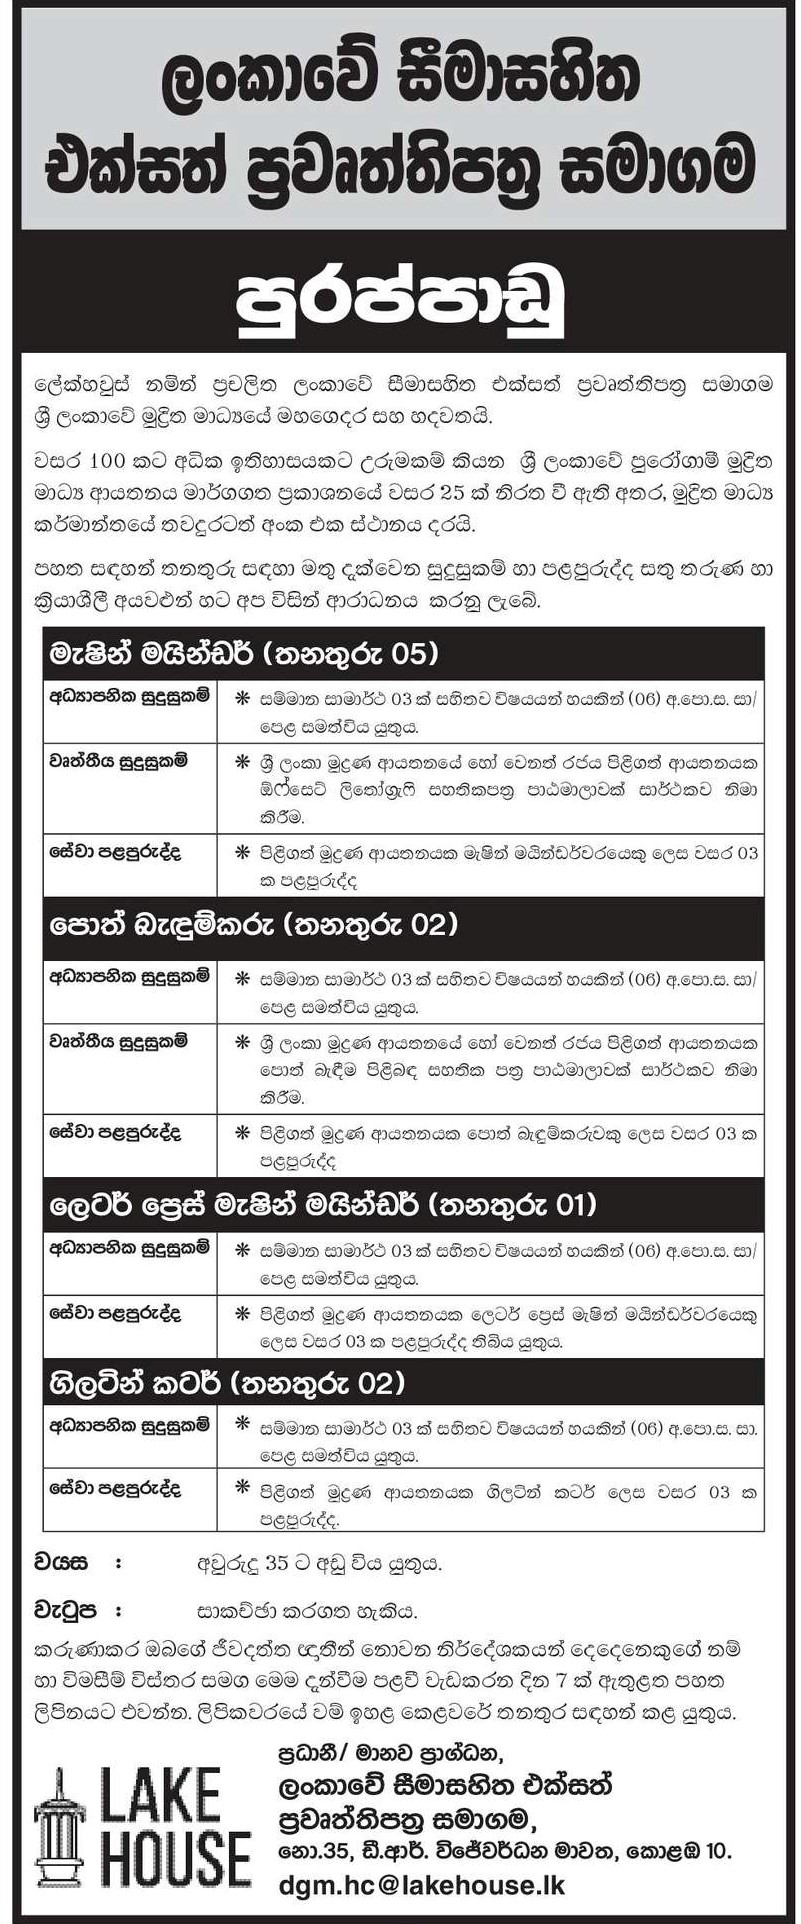 Machine Minder, Book Binder, Letter Press Machine Minder, Guillotine Cutter - The Associated Newspapers of Ceylon Sinhala Details